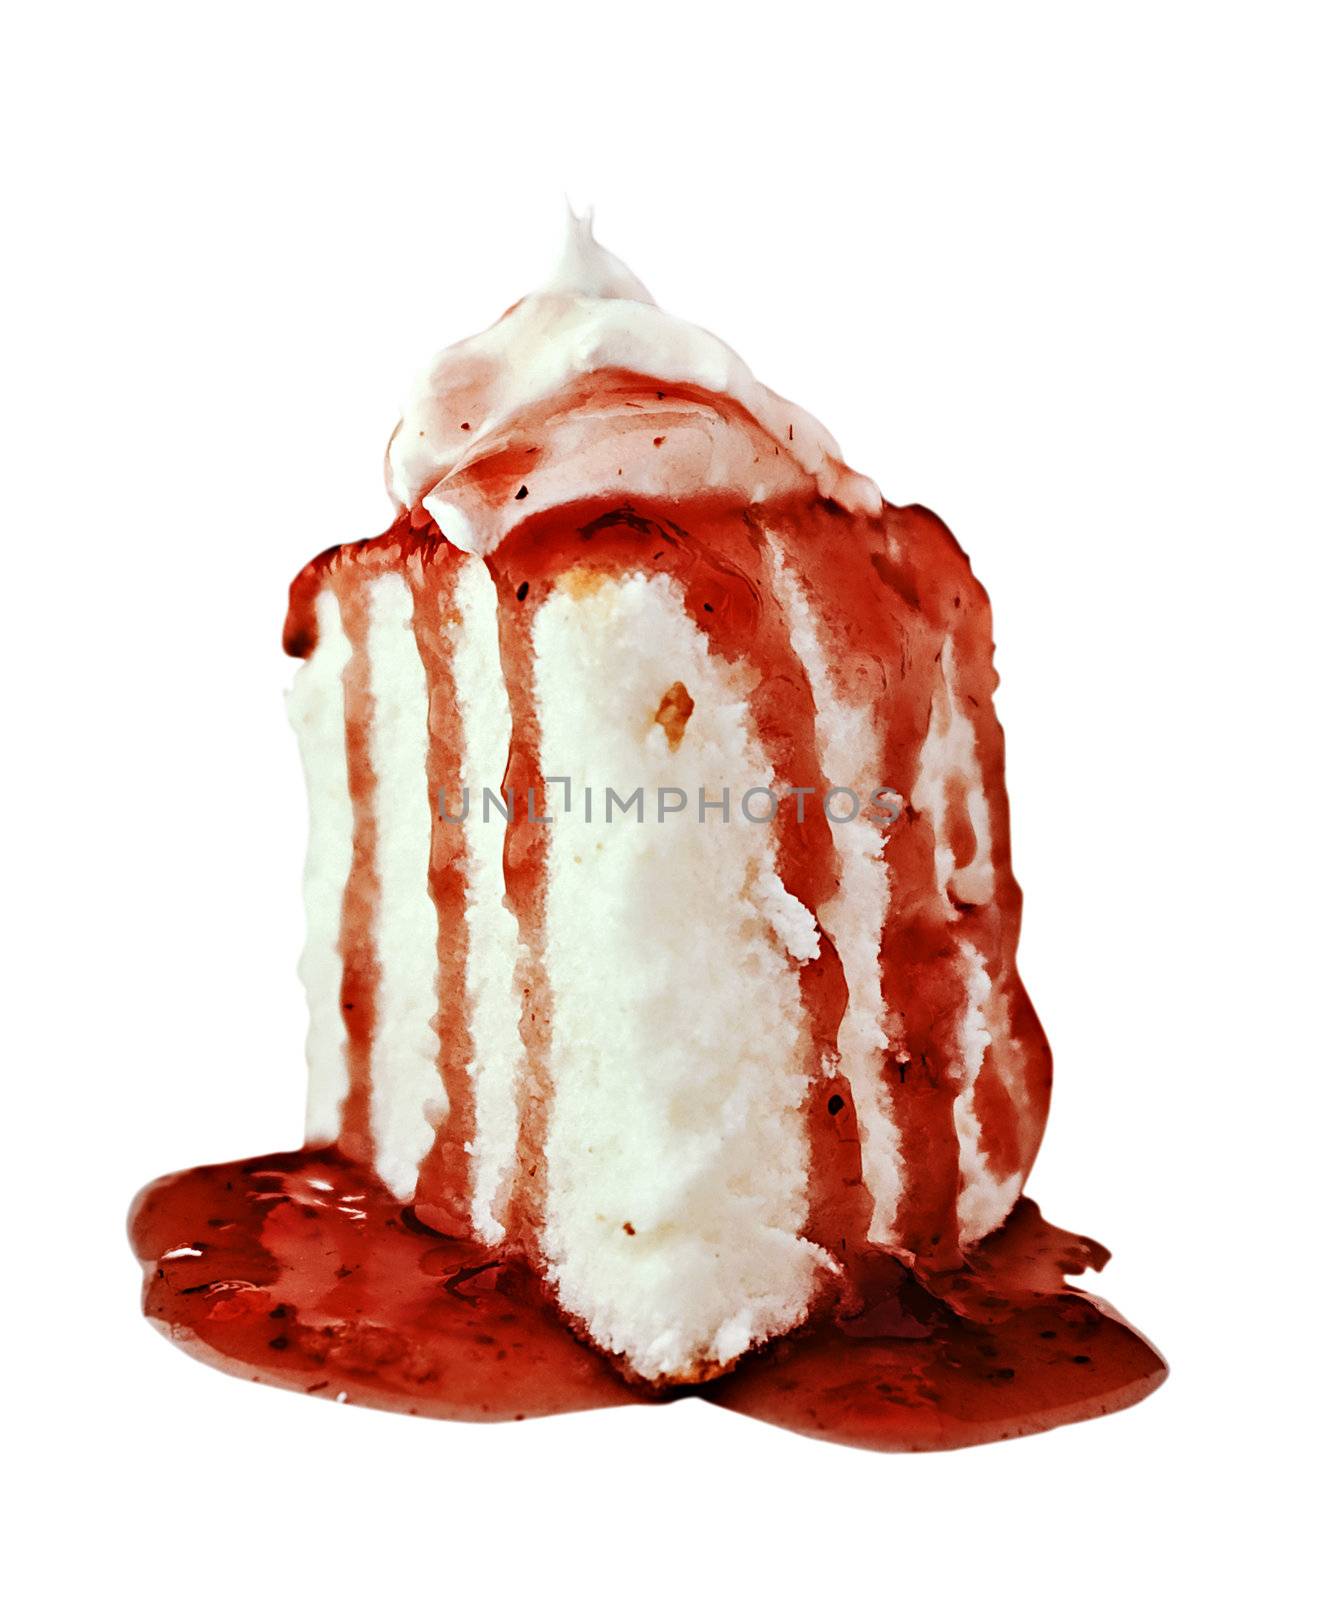 Angel food cake with strawberry glaze and whip cream  by StephanieFrey